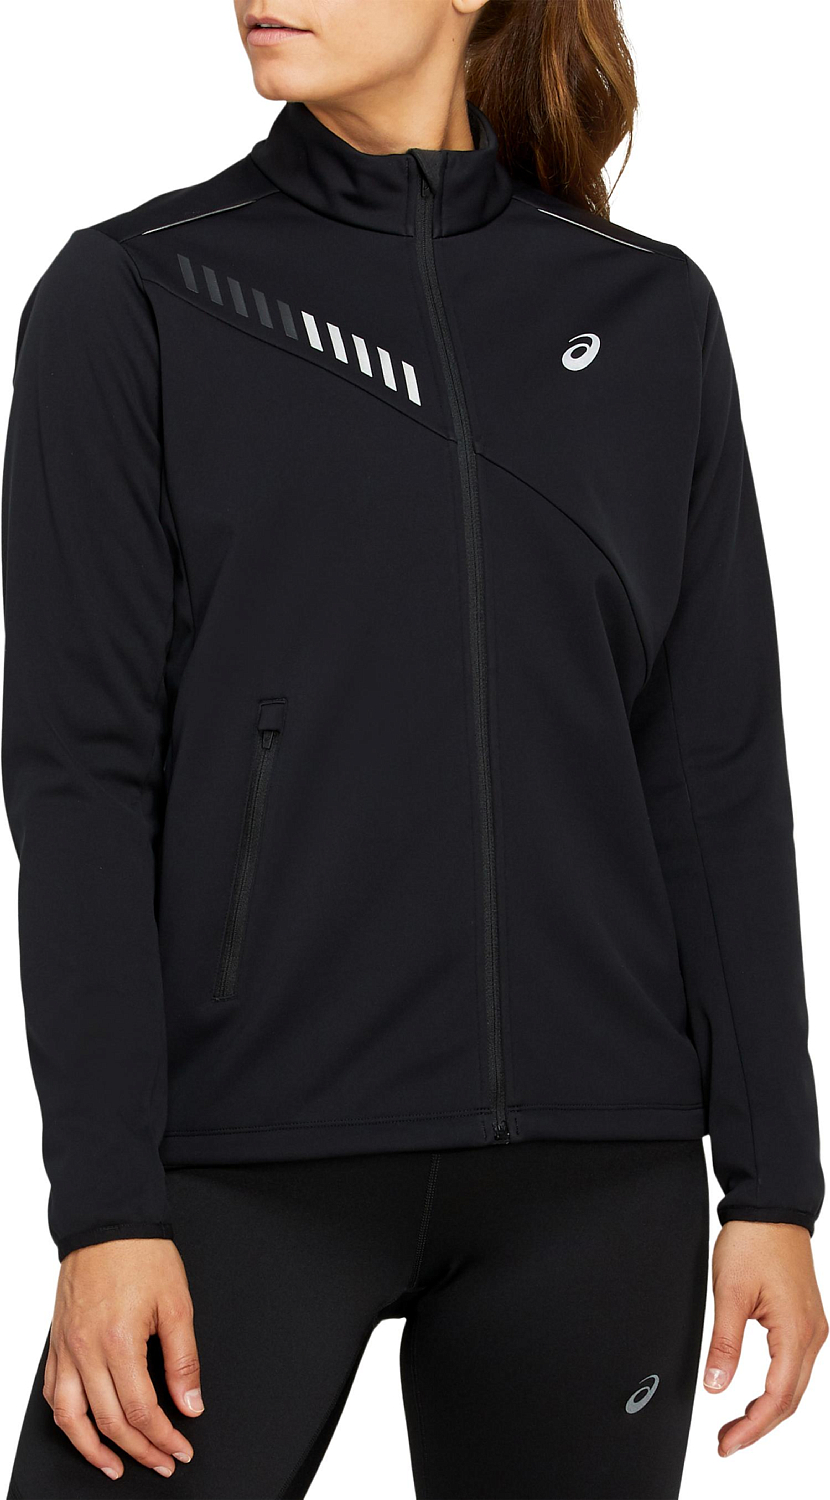 Куртка беговая Asics 2020-21 Lite-show winter jacket Performance Black/Graphite Grey